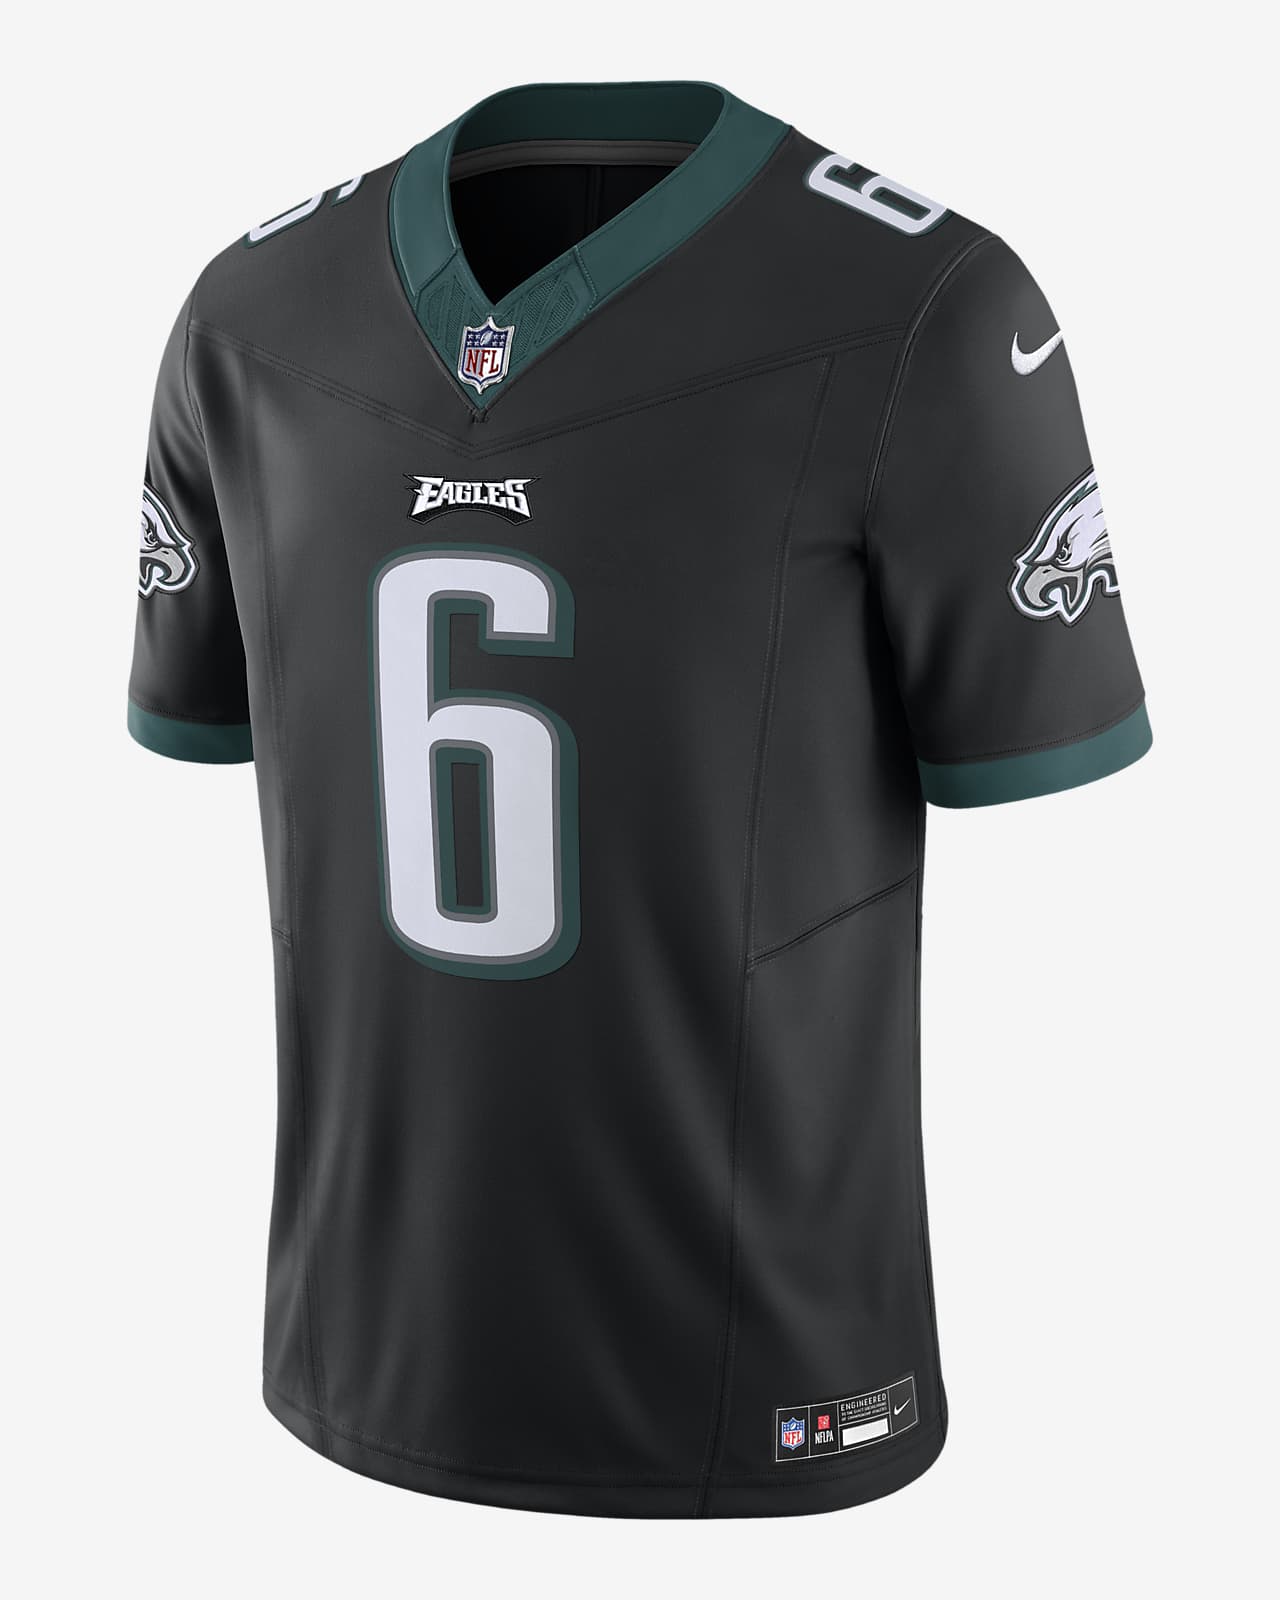 Jersey de fútbol americano Nike Dri-FIT de la NFL Limited para hombre DeVonta Smith Philadelphia Eagles